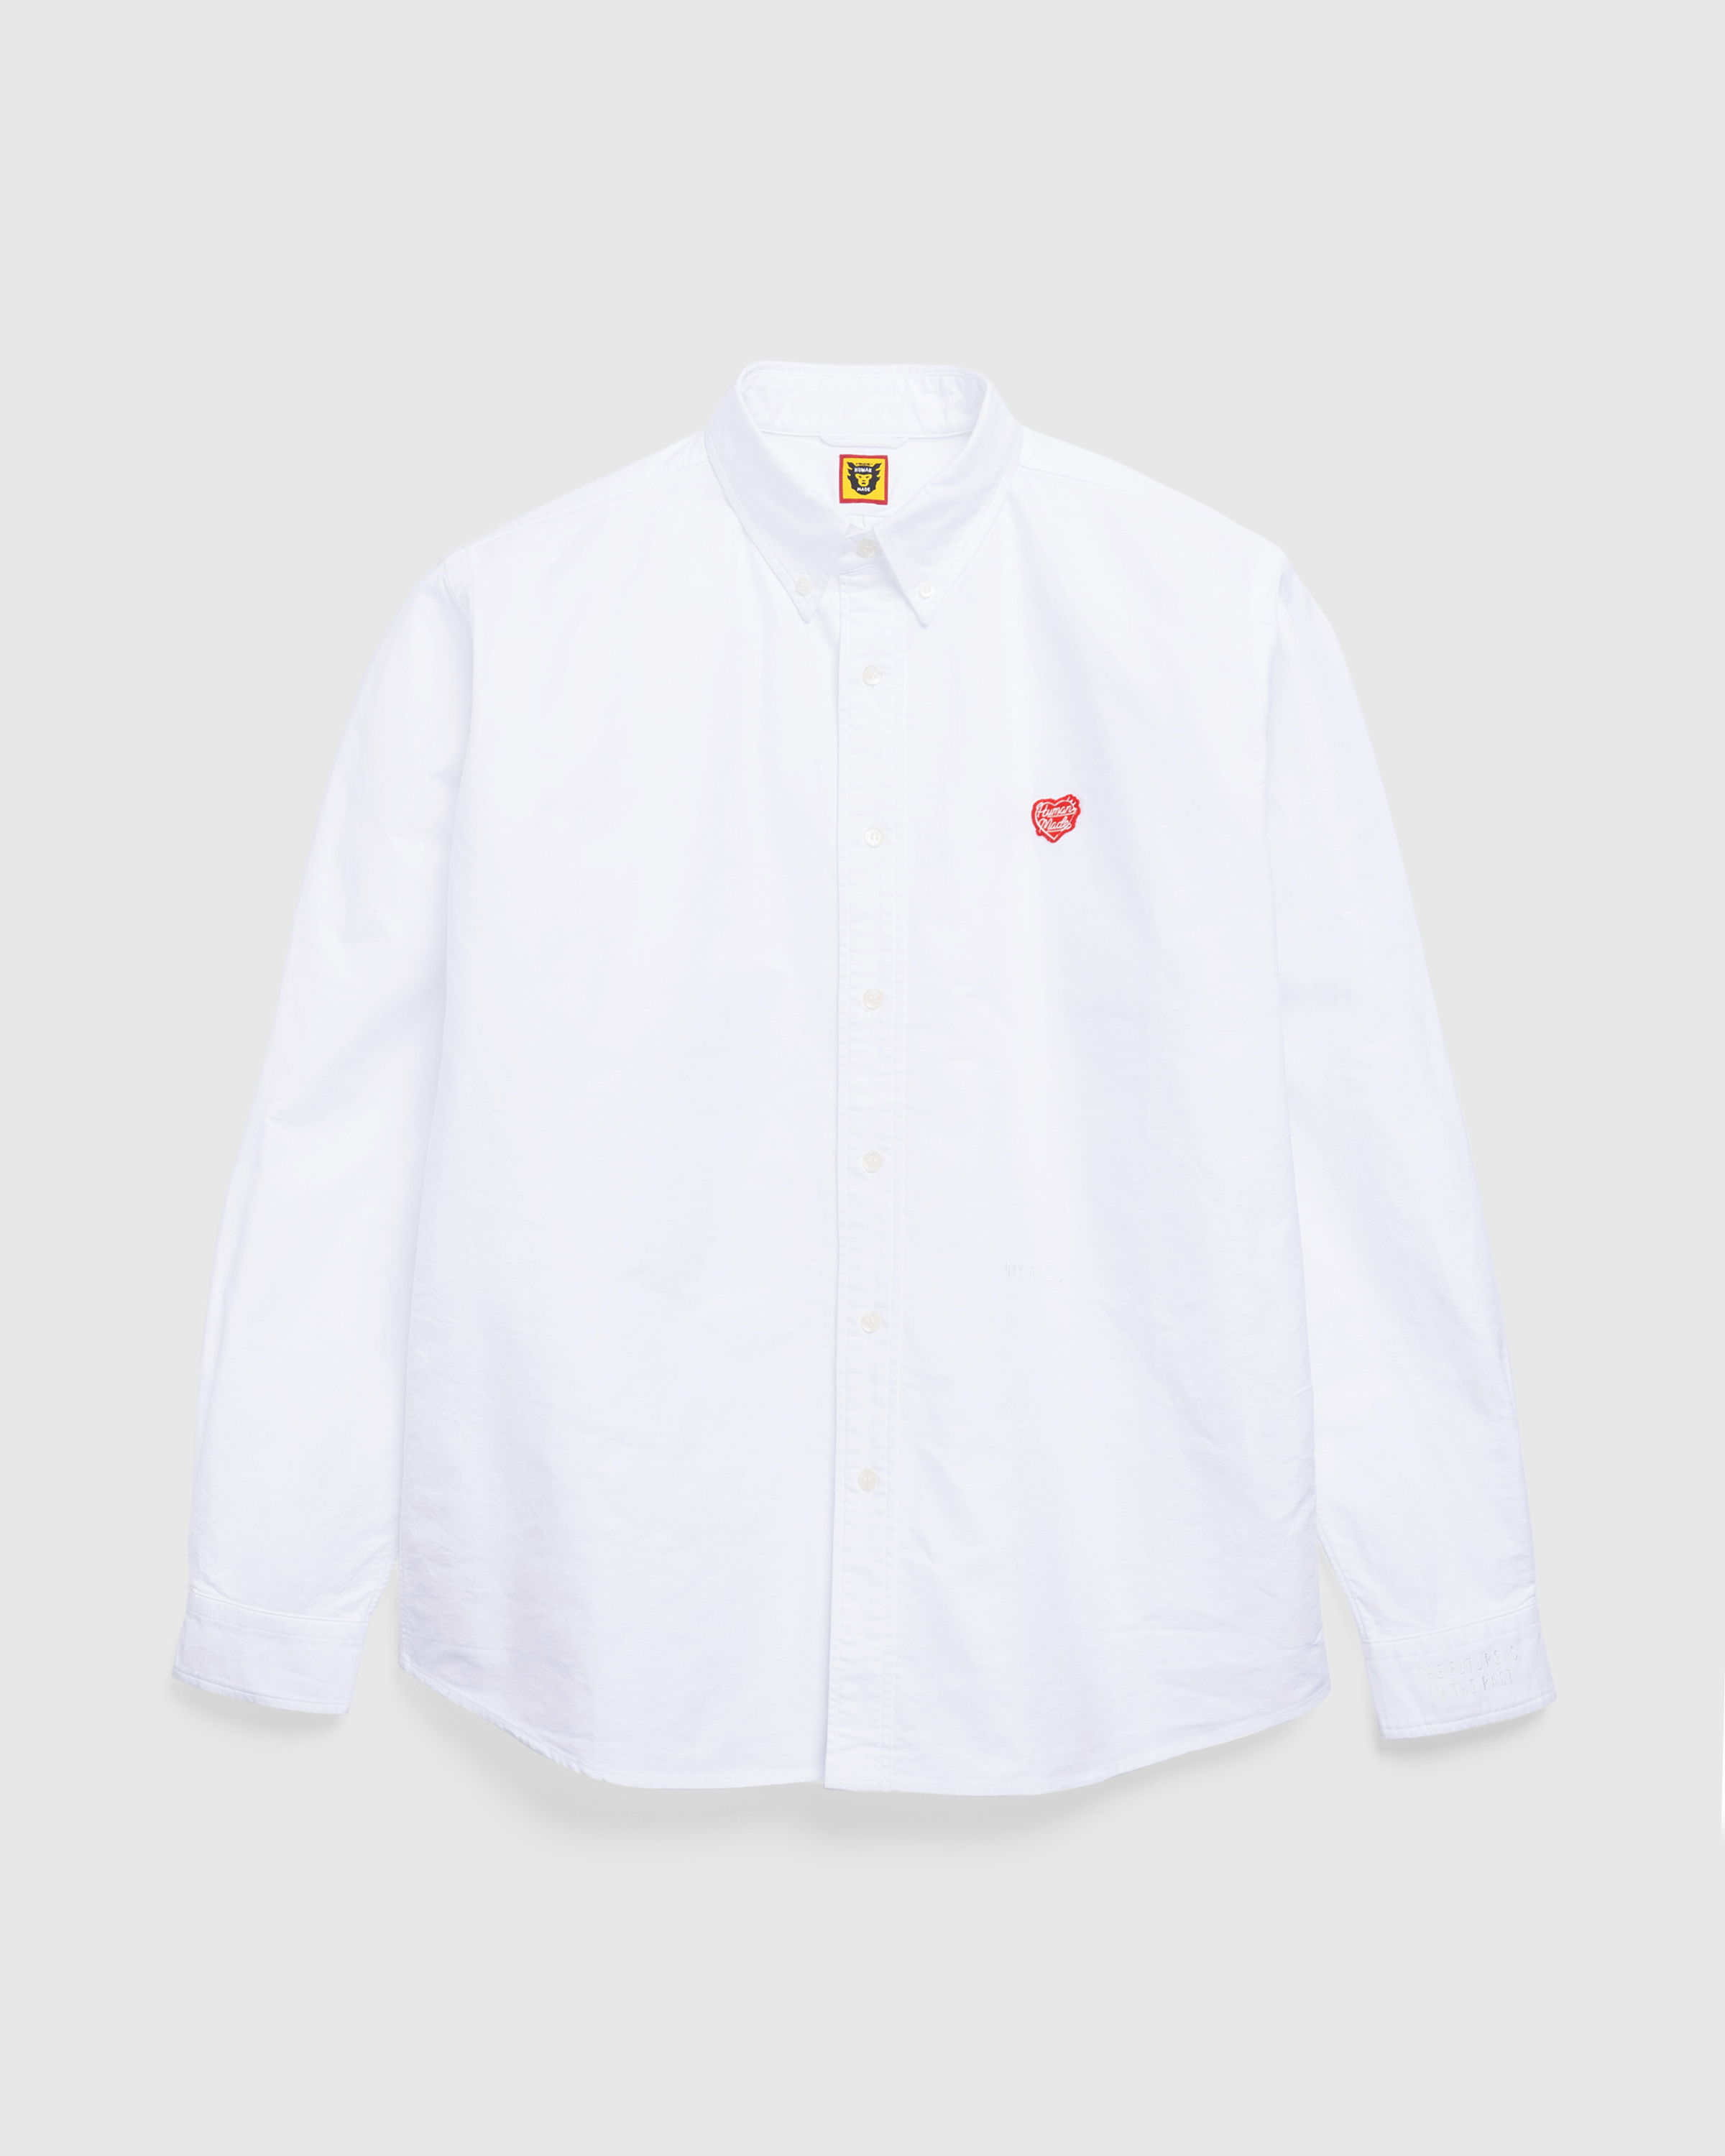 Human Made – Oxford BD Shirt White - Longsleeve Shirts - White - Image 1